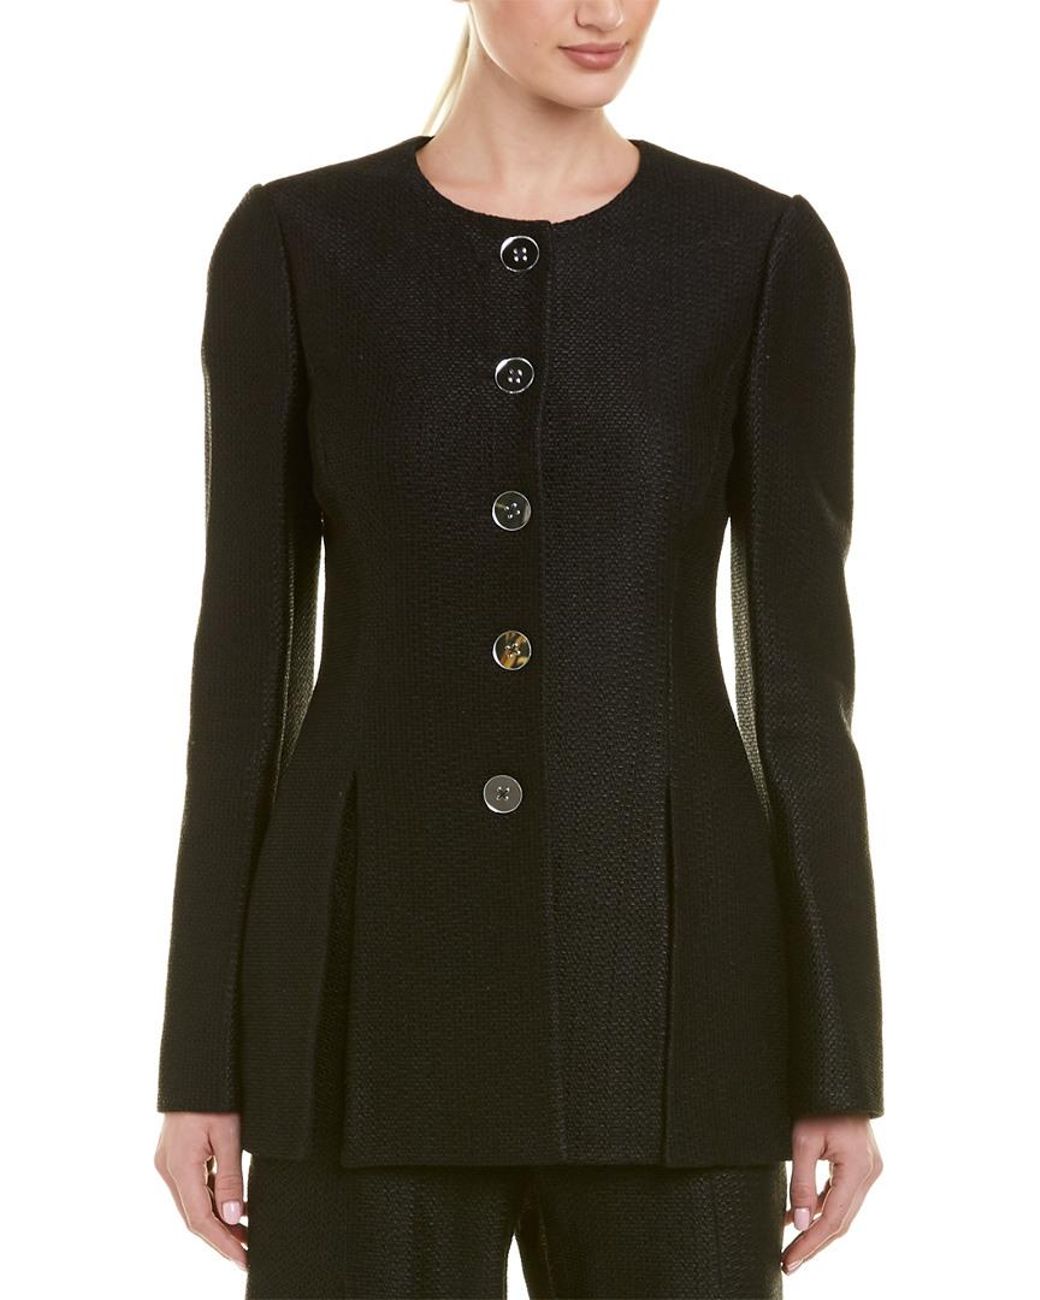 Carolina Herrera Linen-blend Silk-lined Jacket in Black - Lyst